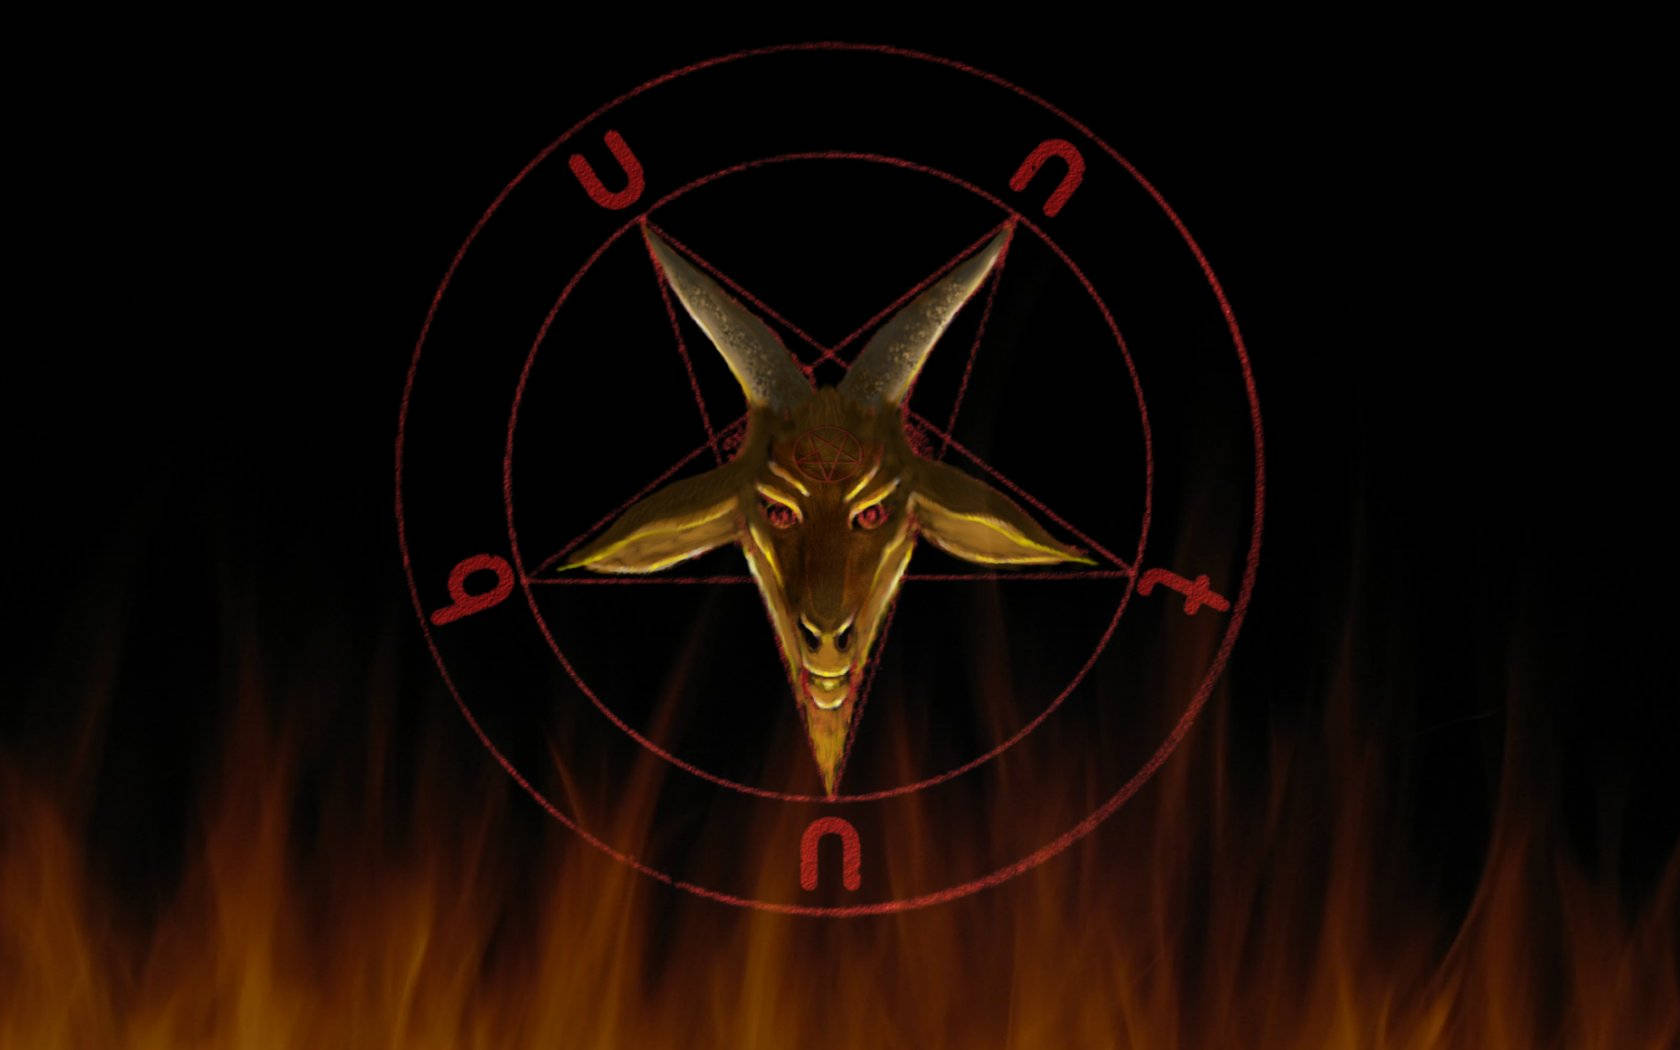 Satanic 1680X1050 Wallpaper and Background Image